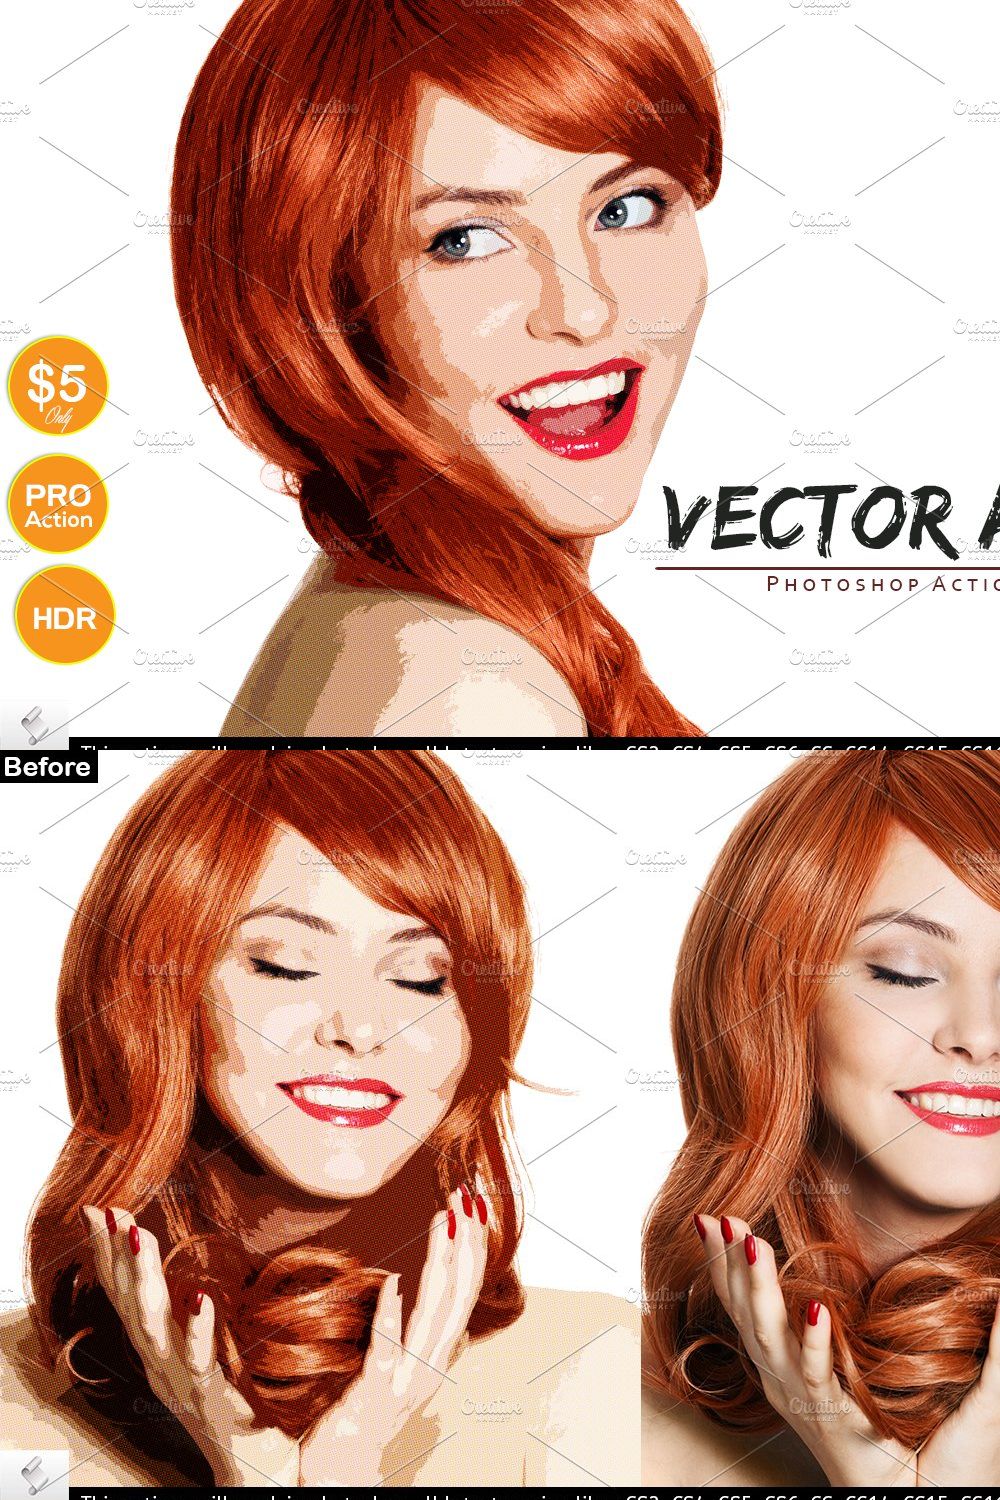 Vector Art - Photoshop Action pinterest preview image.